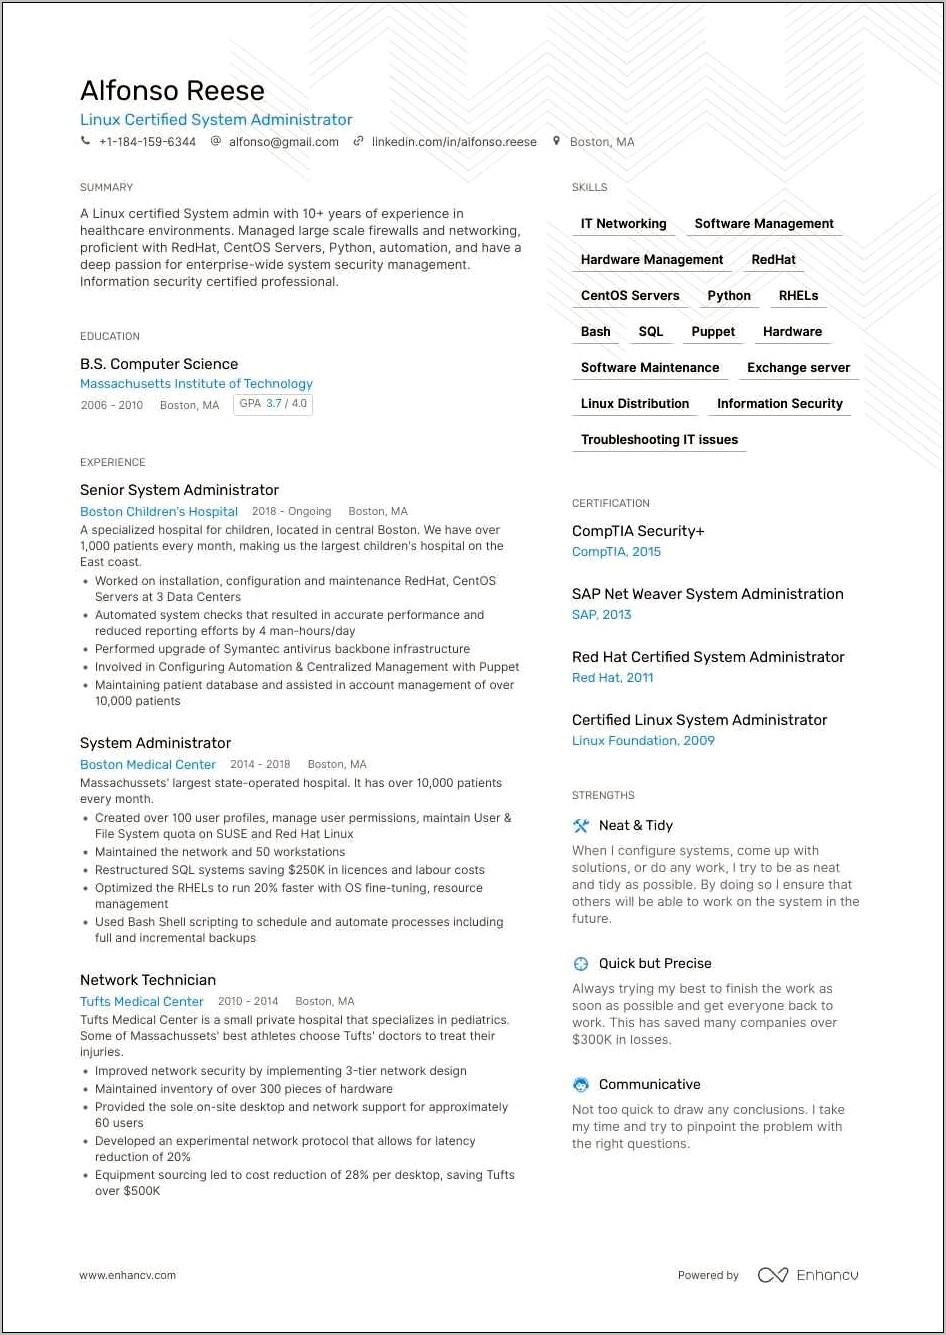 Sample Resume For Linux System Administrator Fresher